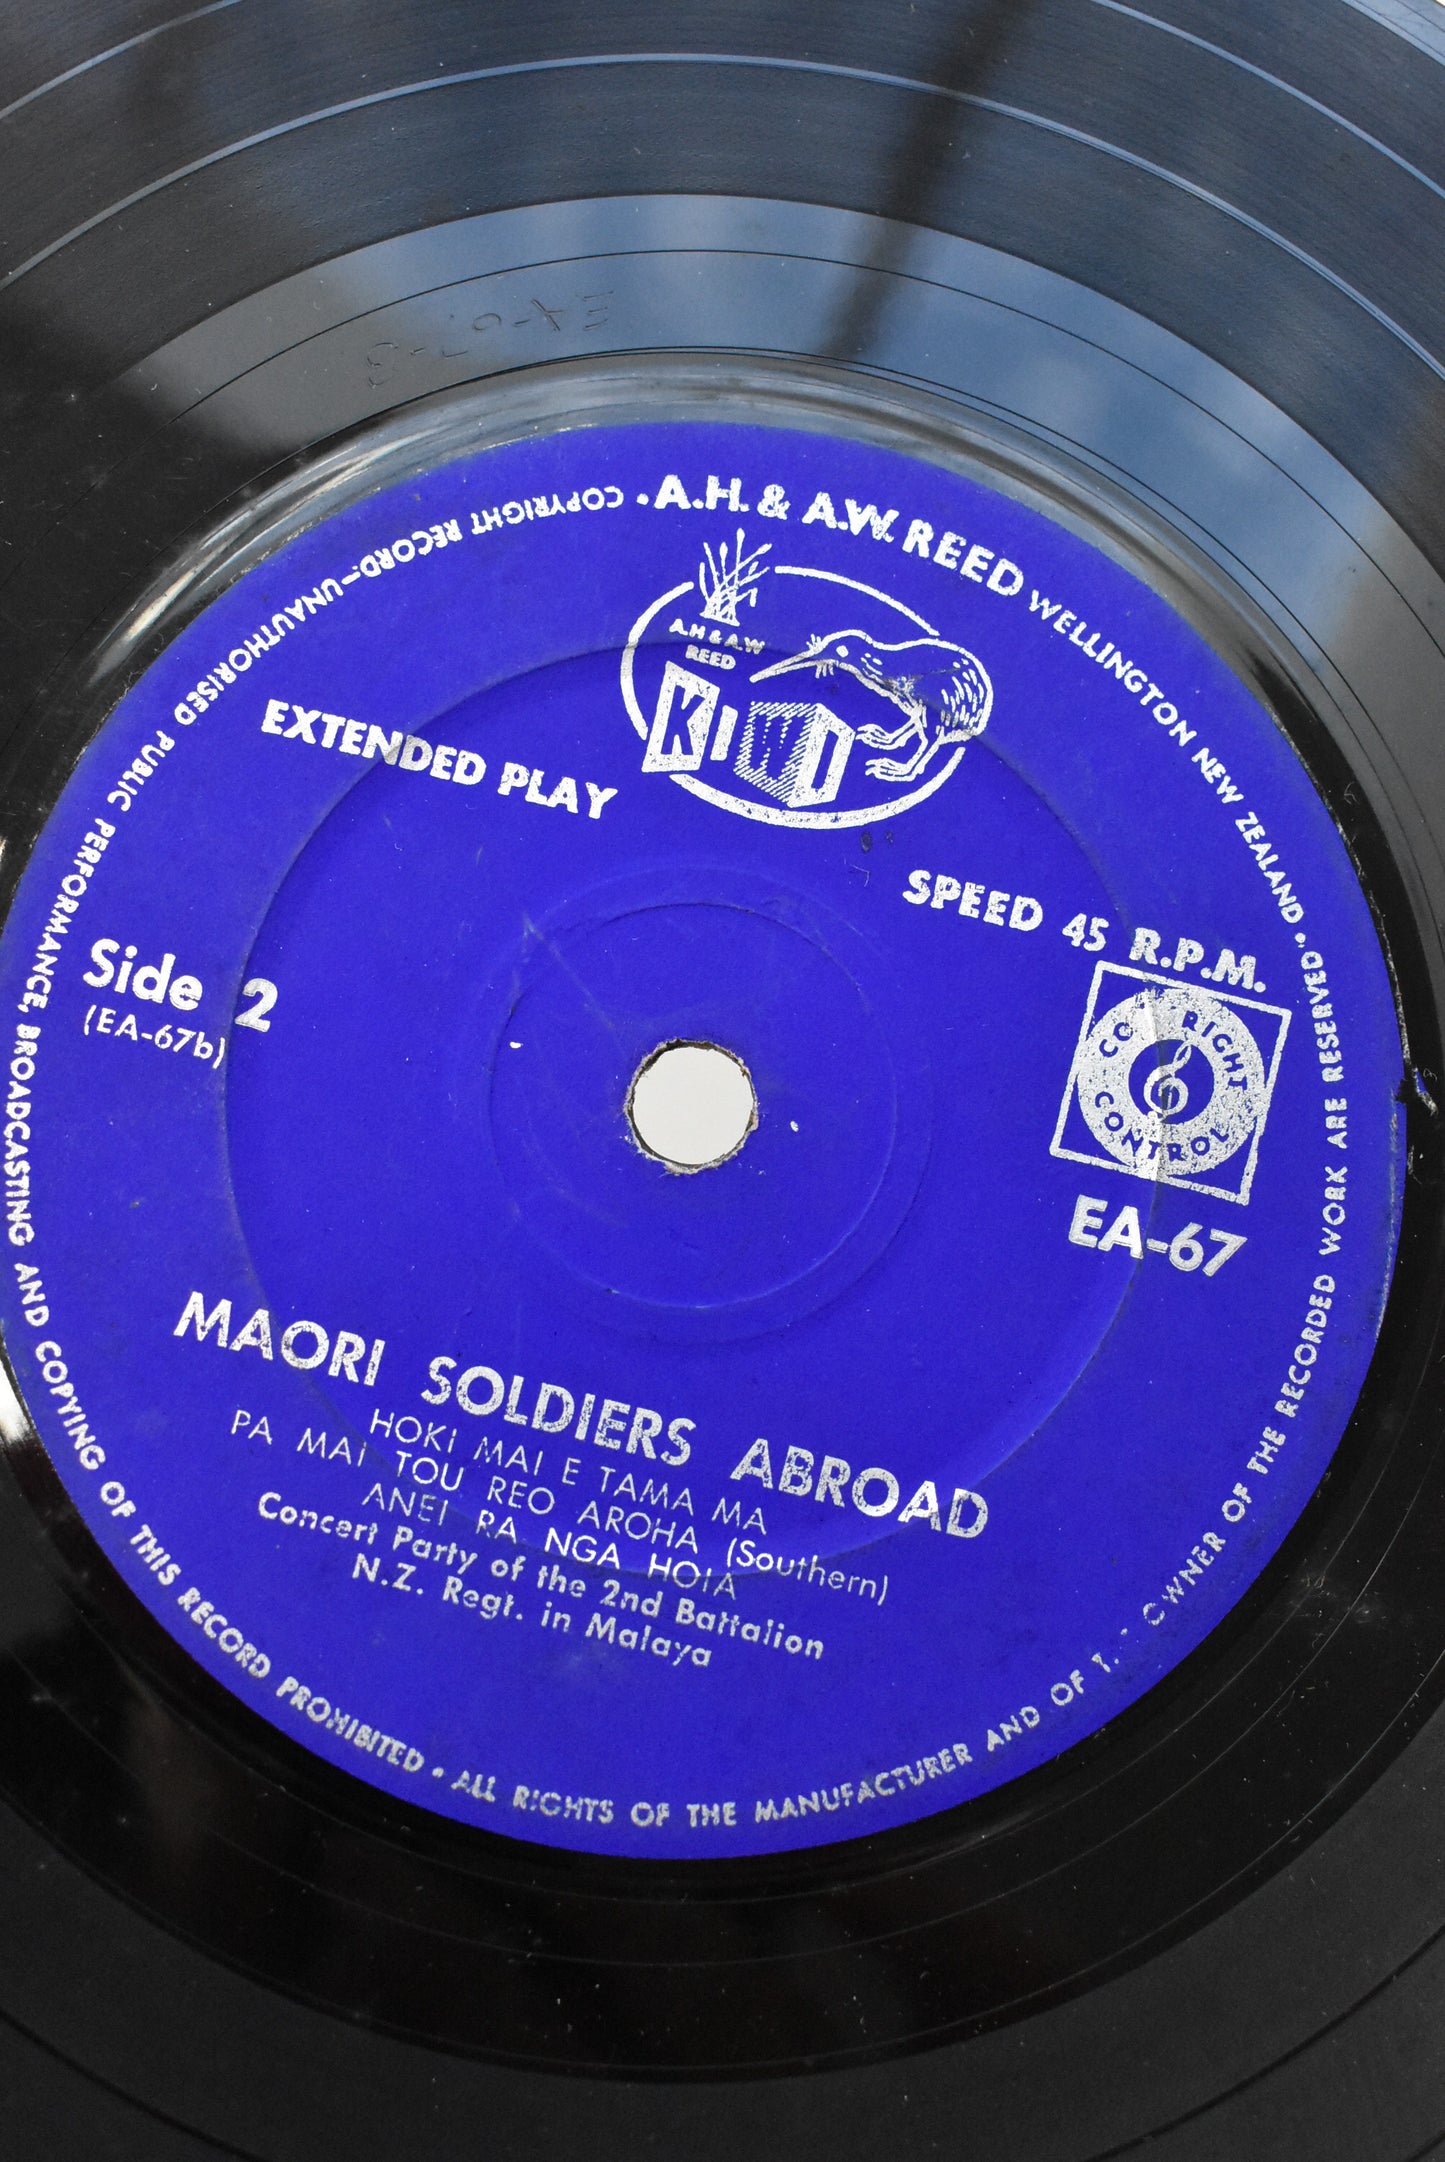 Vintage 'Maori Soldiers Abroad' vinyl record